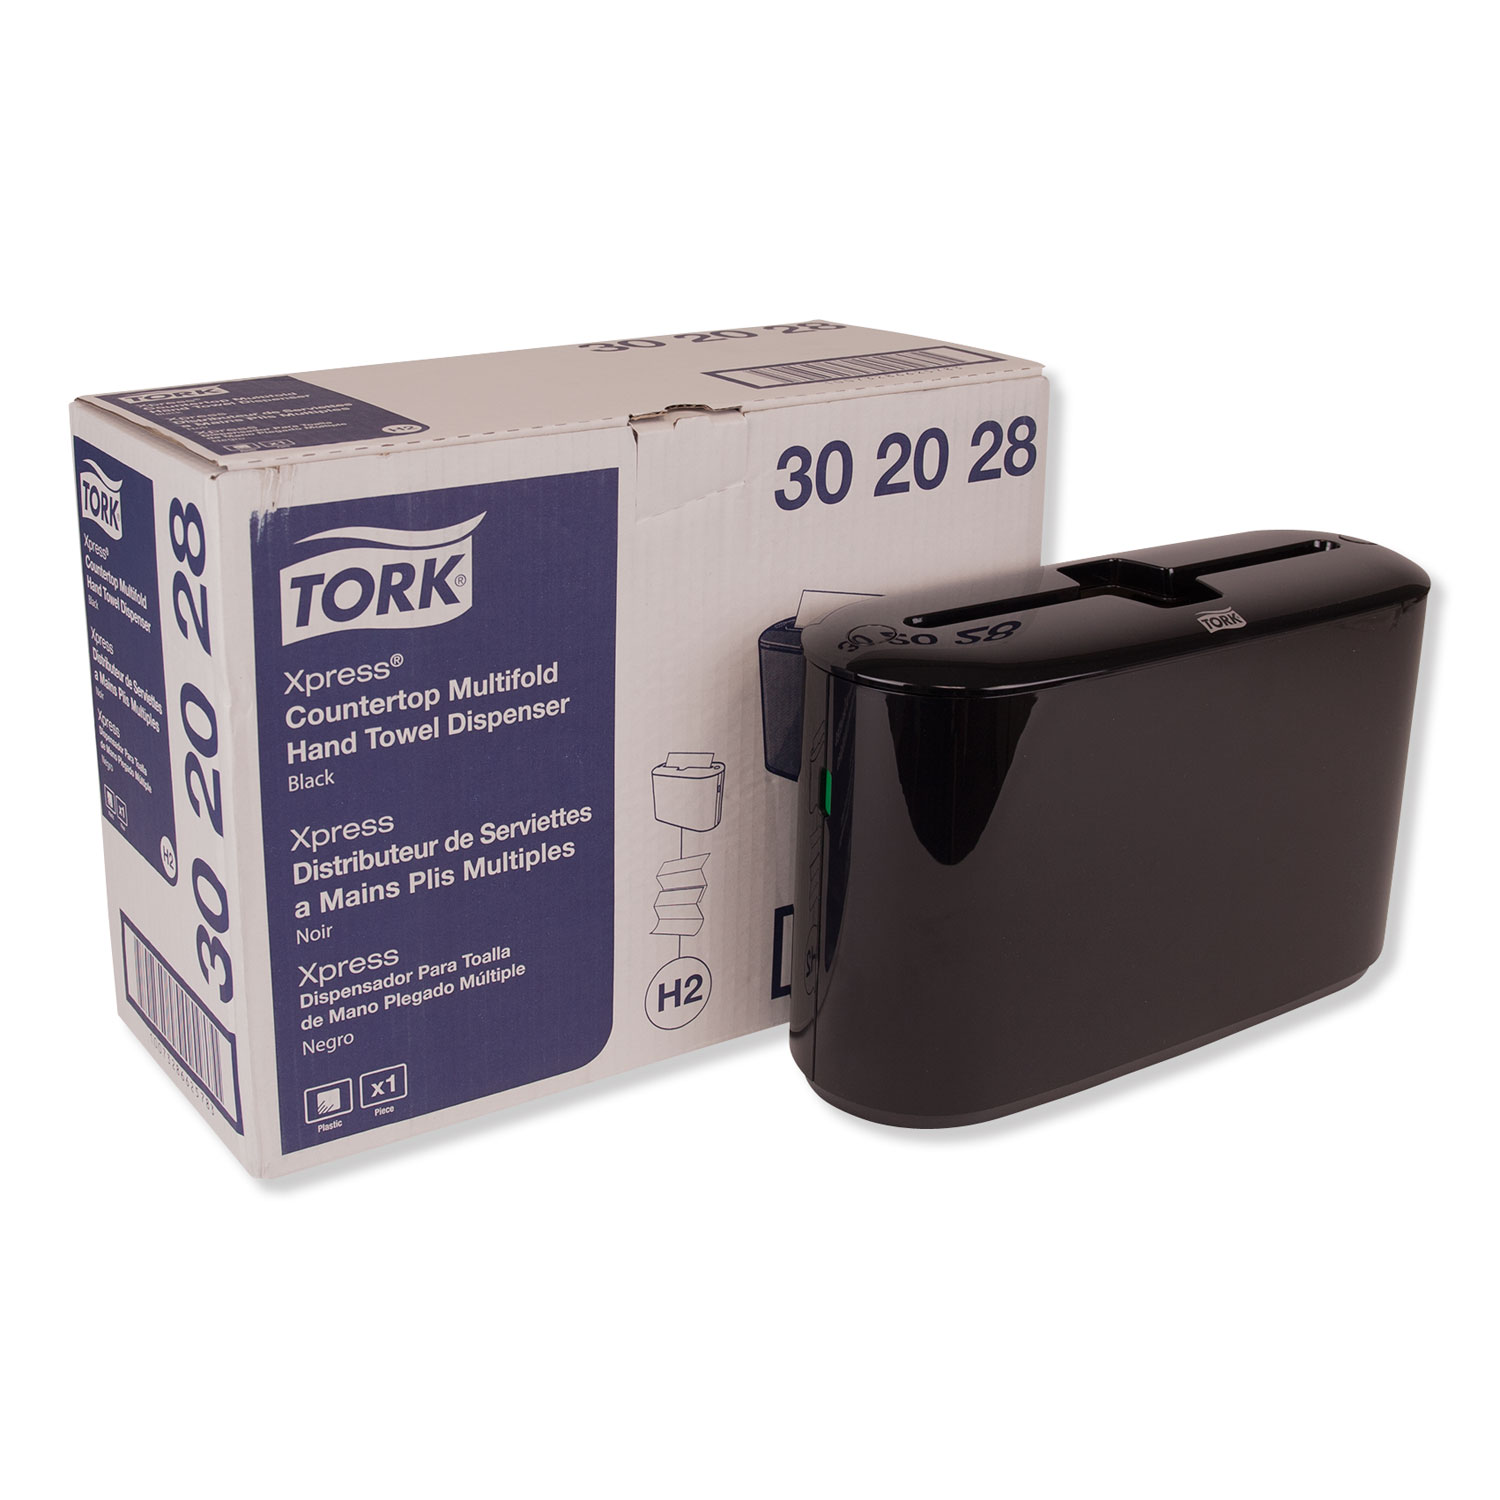  Tork 302028 Xpress Countertop Towel Dispenser, 12.68 x 4.56 x 7.92, Black (TRK302028) 